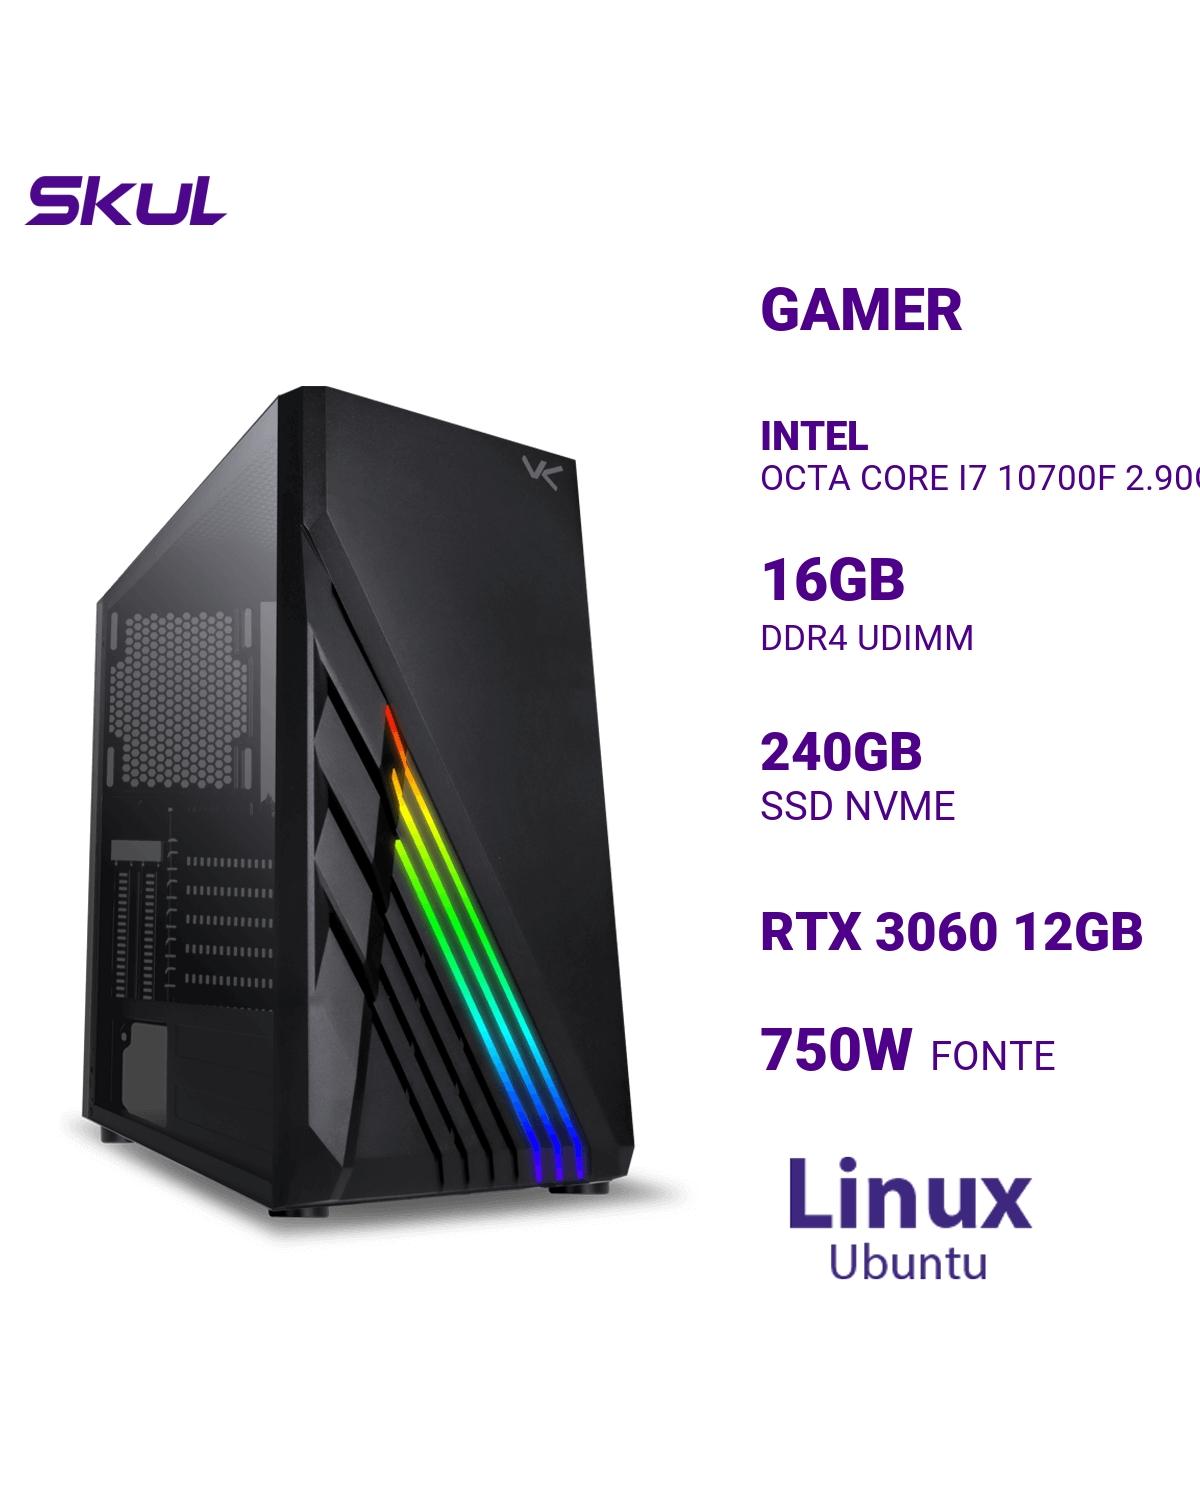 COMPUTADOR GAMER 7000 OCTA CORE I7 10700F 2.90GHZ MEM 16GB DDR4 SSD 240GB NVME RTX 3060 12GB FONTE 750W BRONZE LINUX